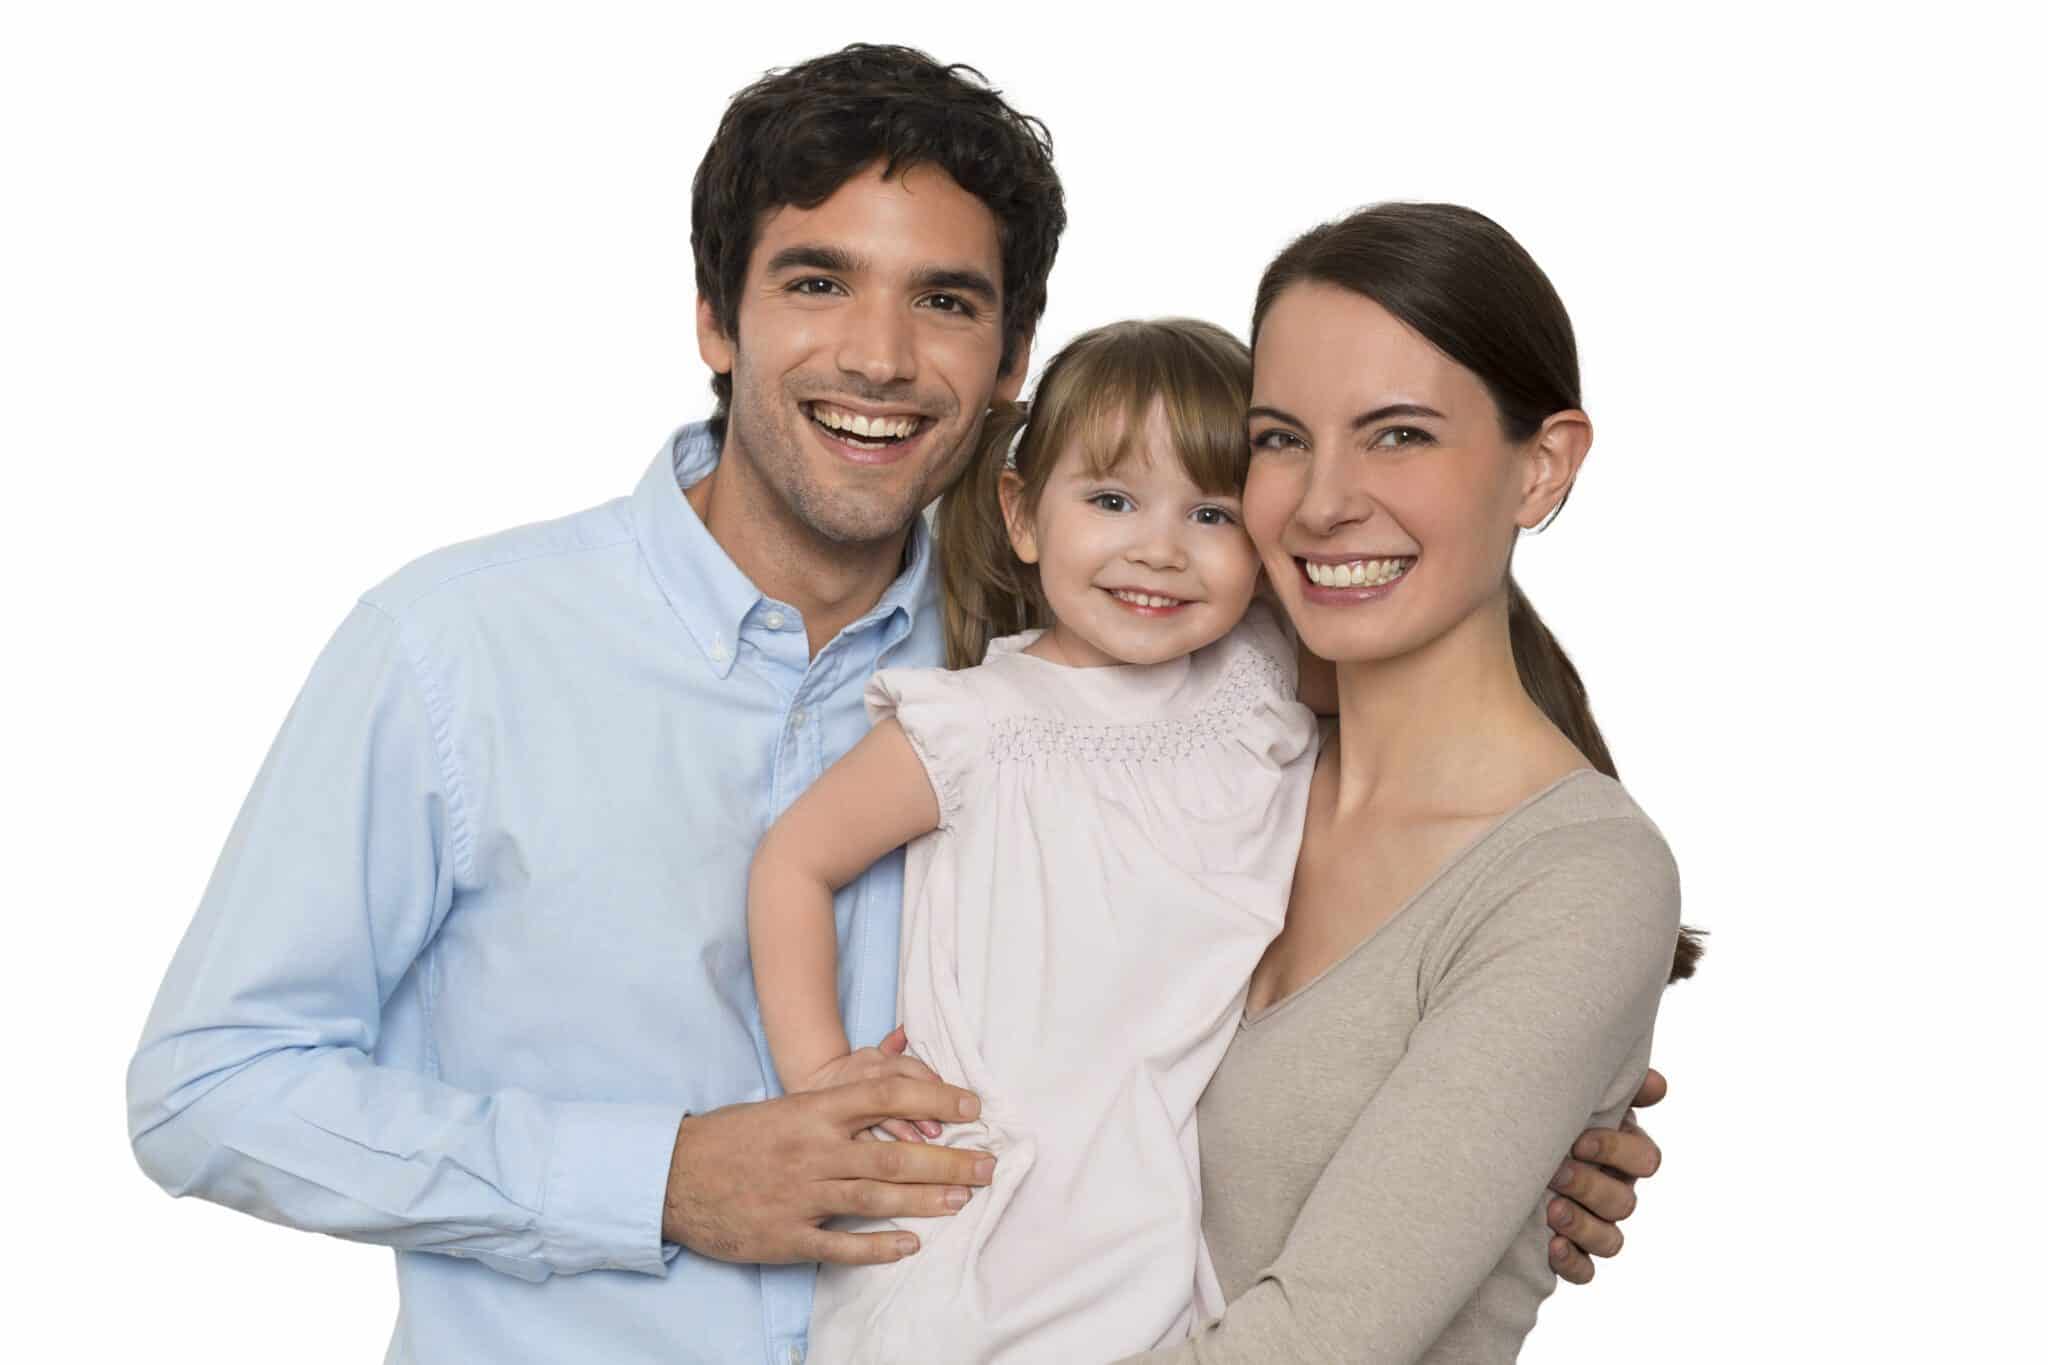 How to choose a family dentist Dr. Von J. Holbrook. Paso Robles Dental Care. General, Cosmetic, Restorative, Preventative, Pediatric, Family Dentistry Paso Robles, CA 93446